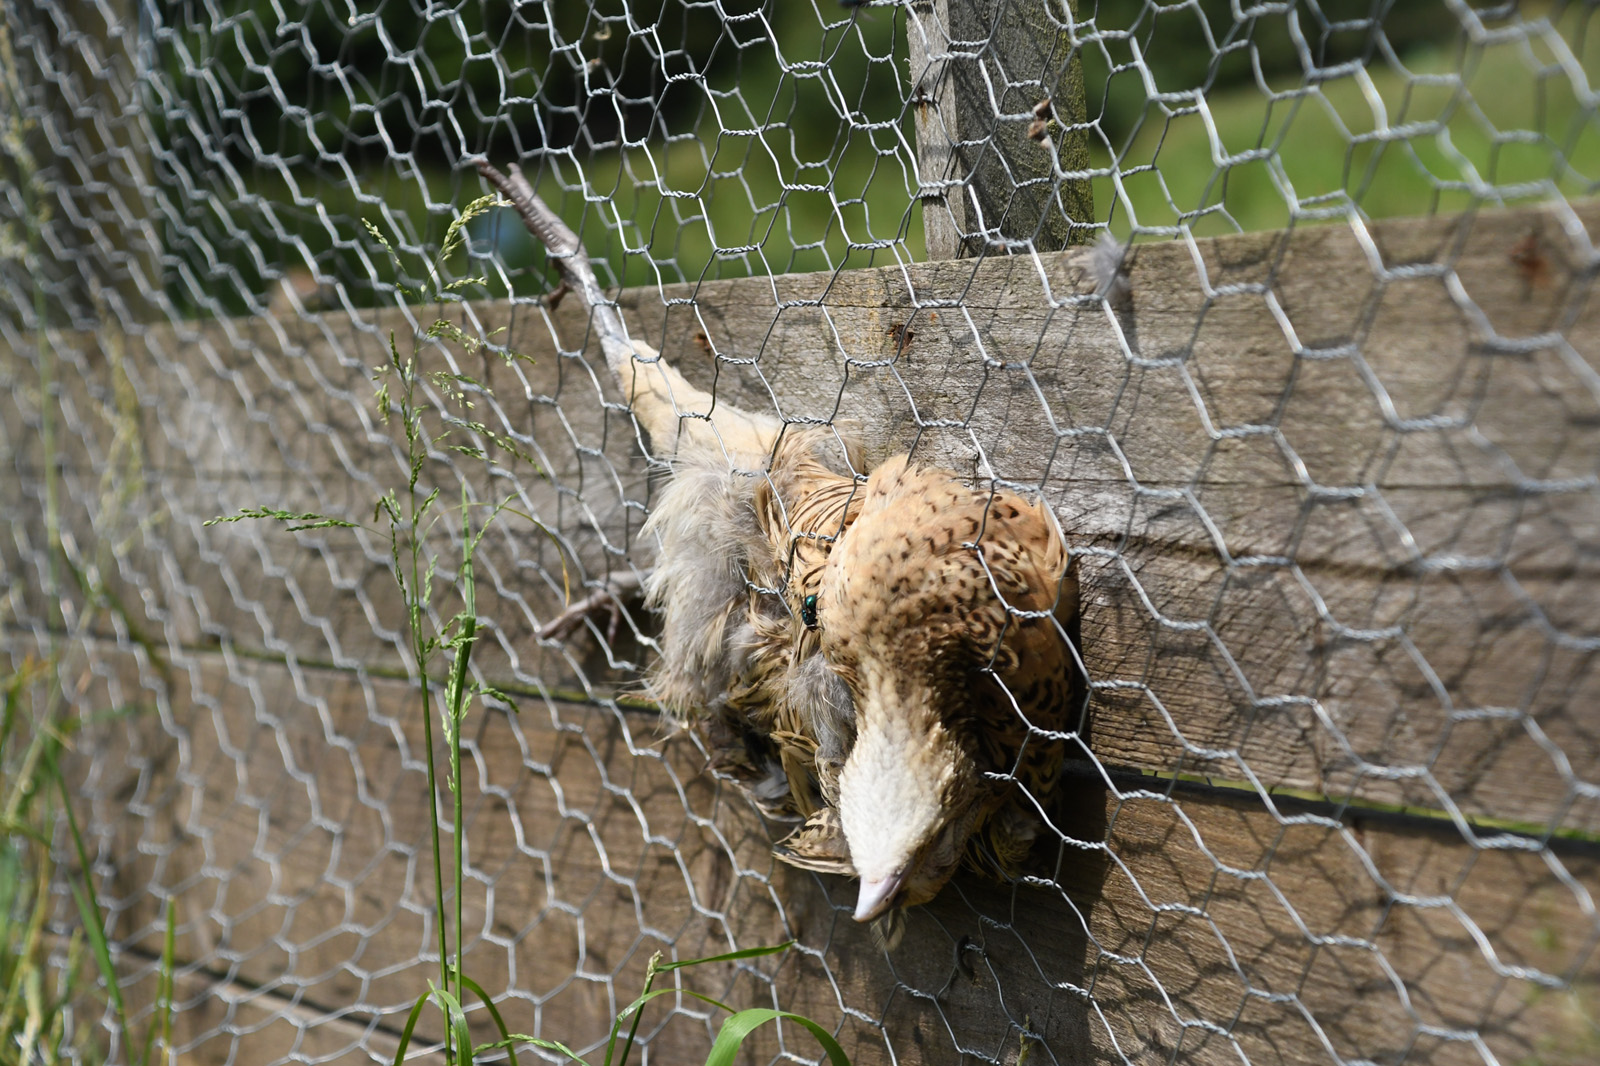 dead bird caught in mesh